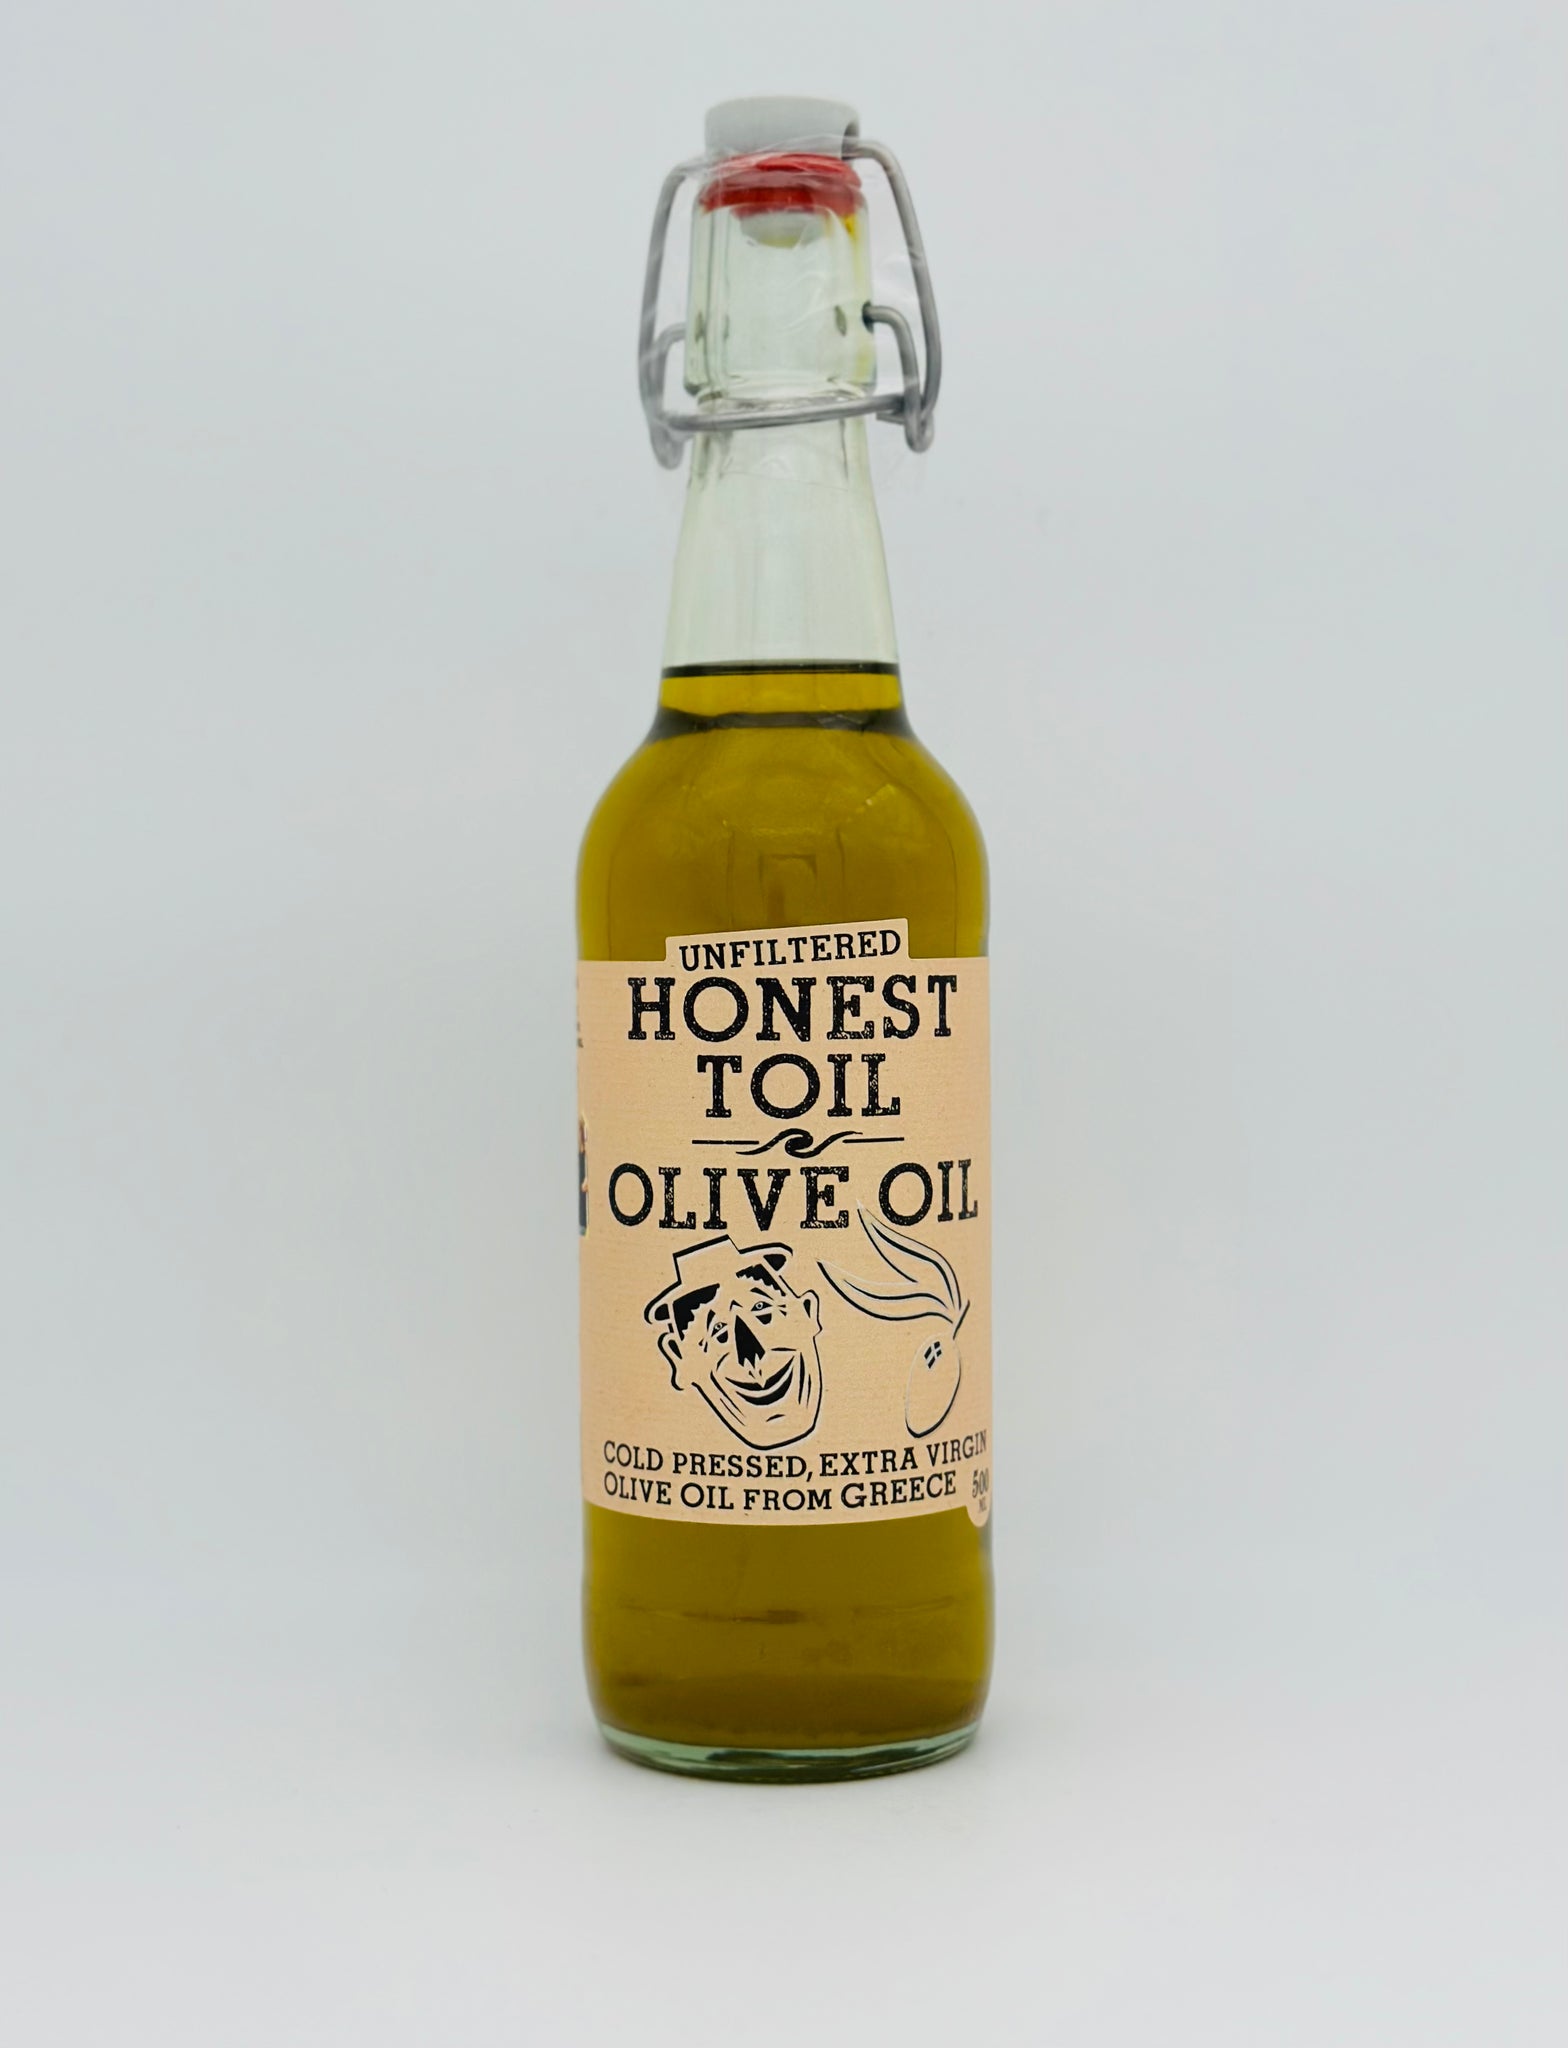 Honest Toil Olive Oil 50cl